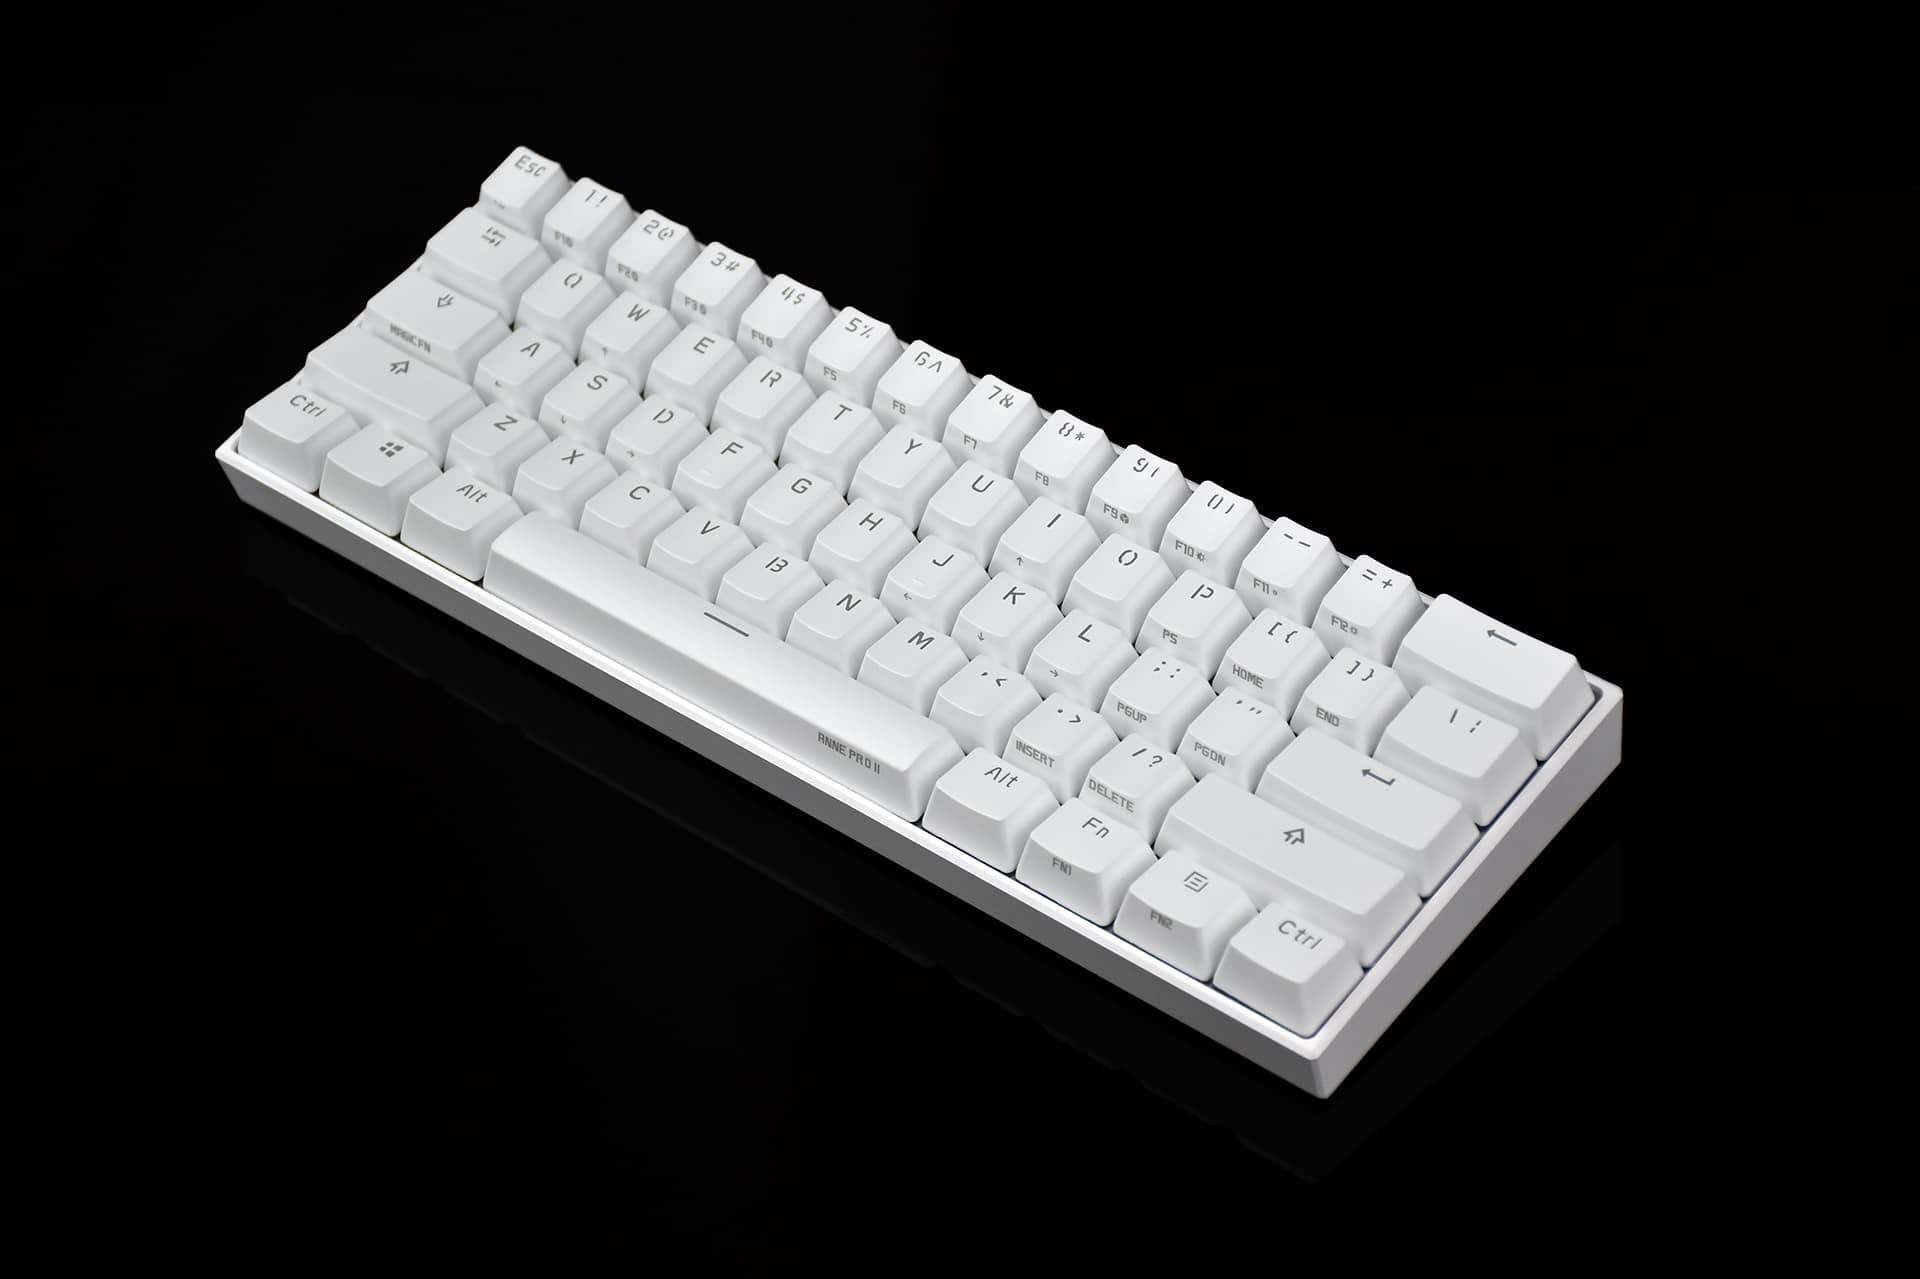 ANNE PRO 2, 60% Mechanical Keyboard, Gateron Brown Switch